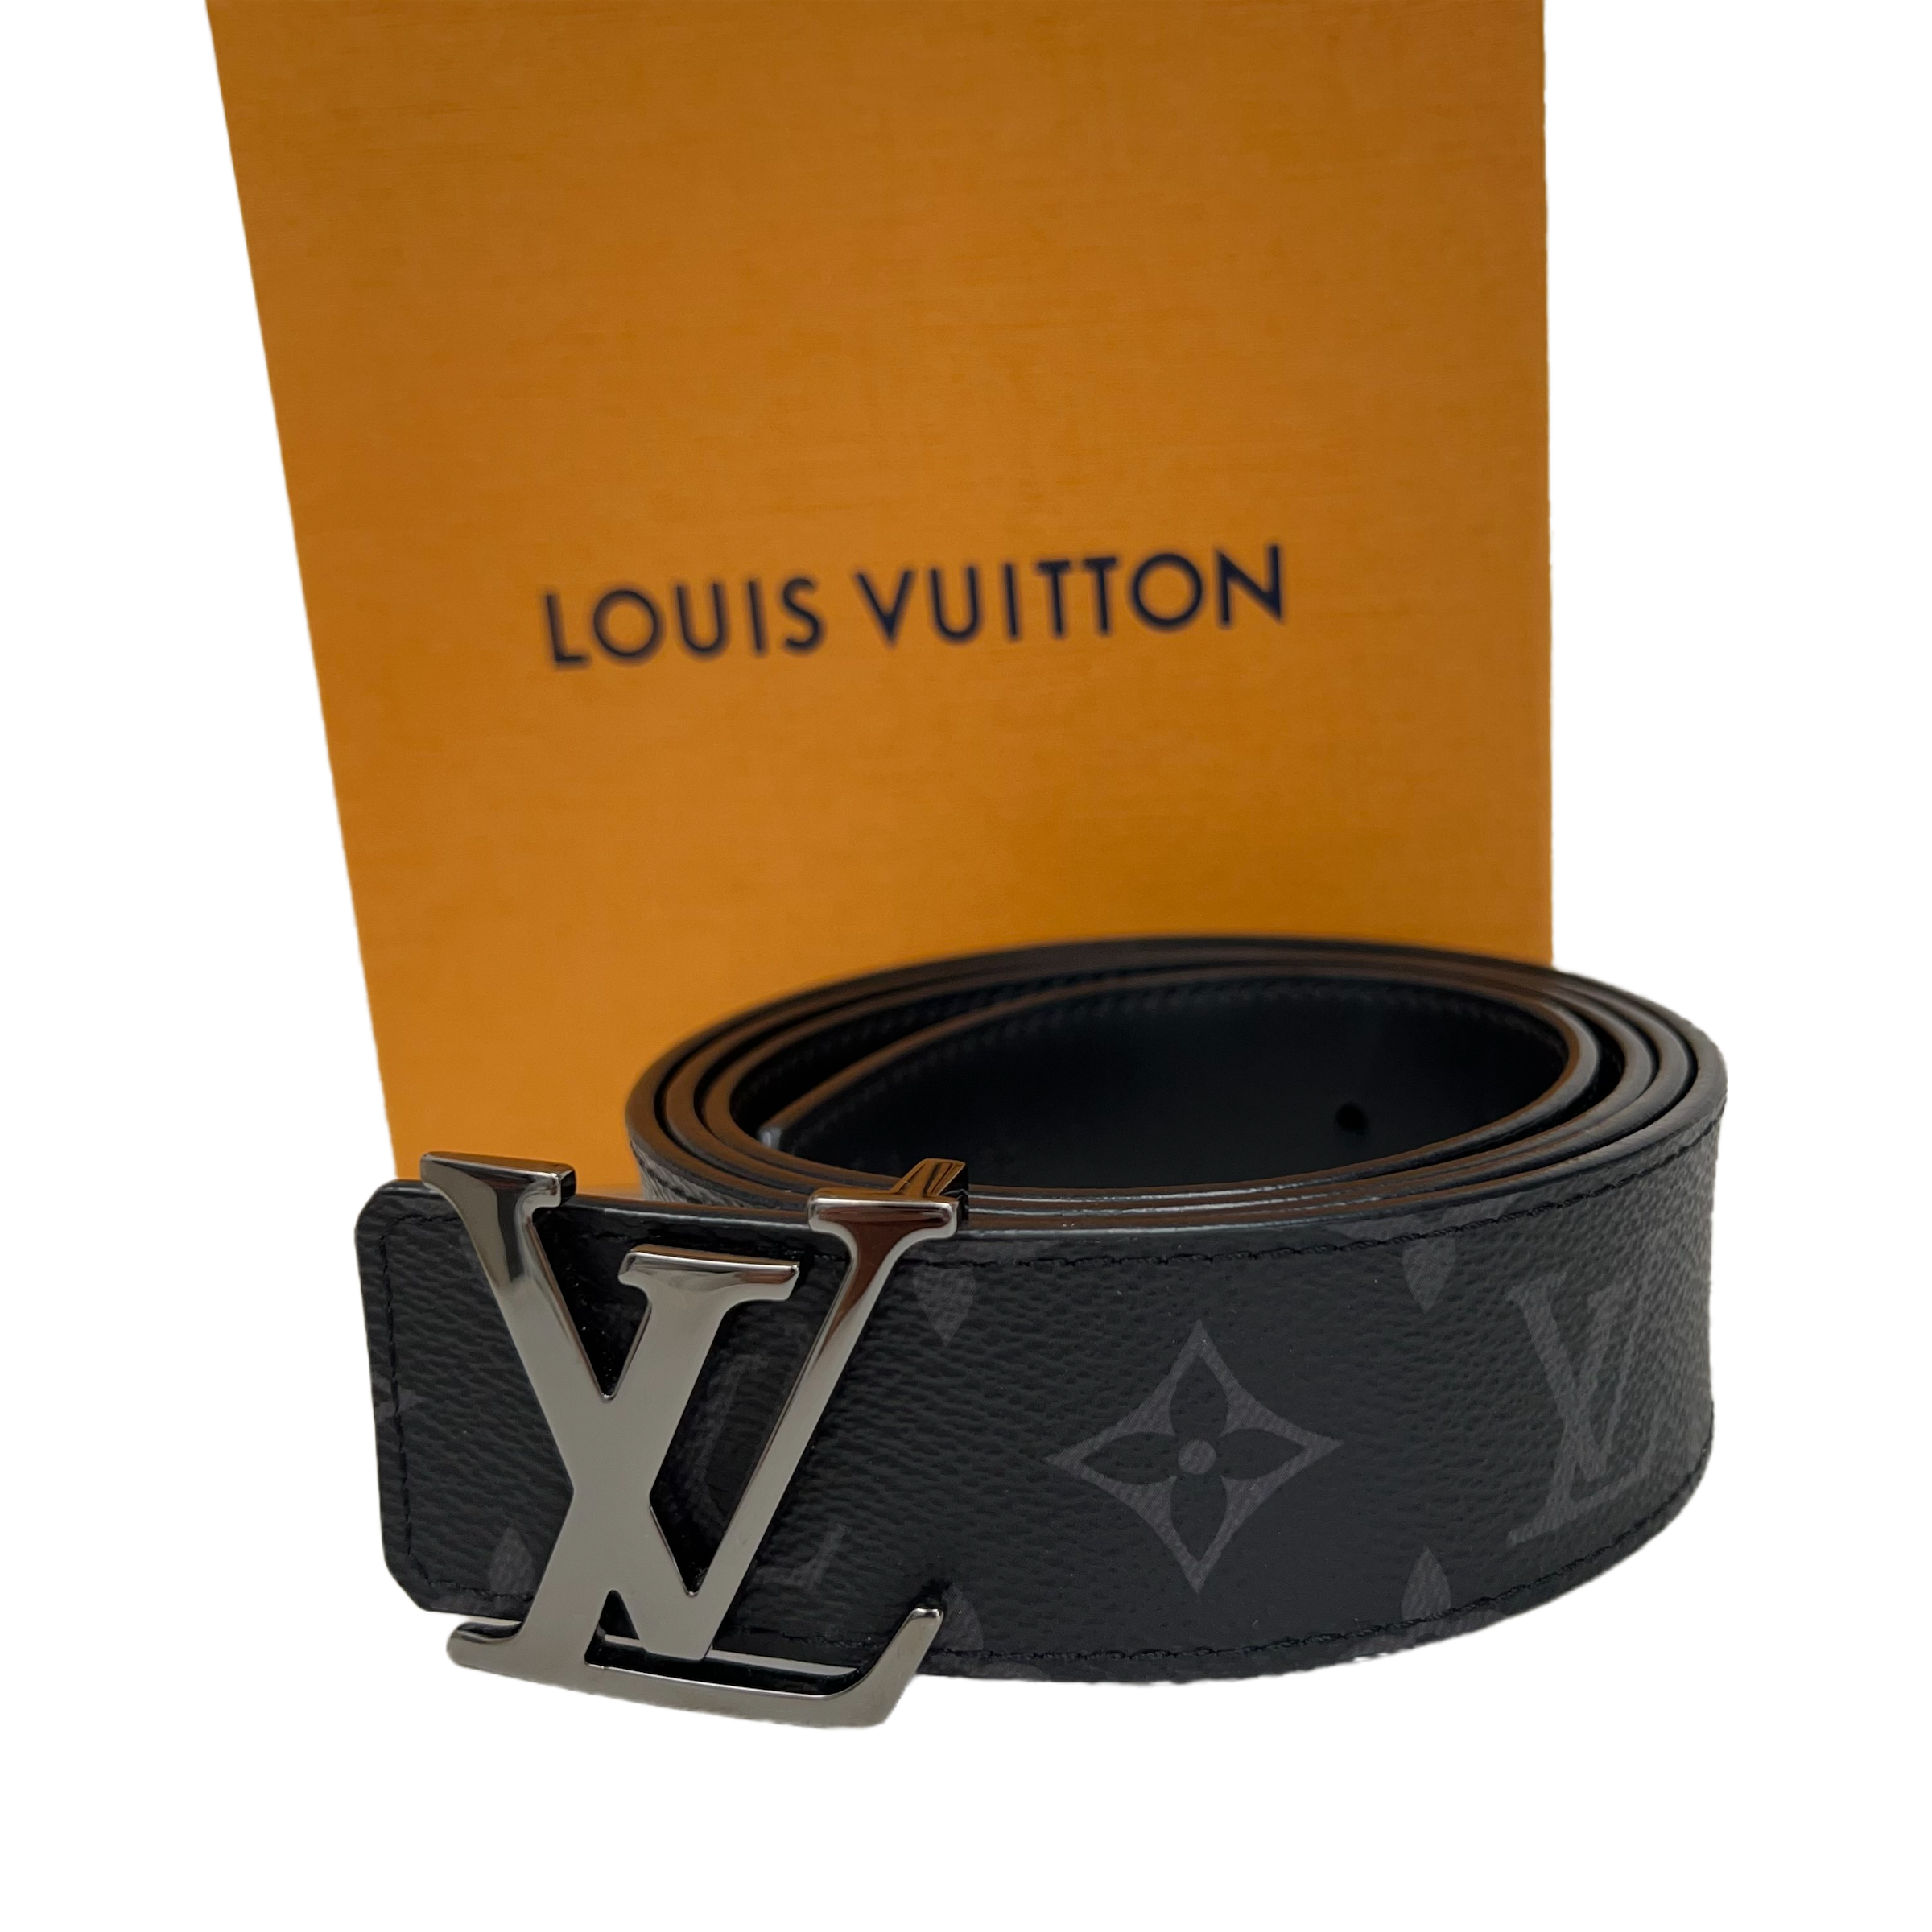 Louis Vuitton Belt PNG Transparent Images - PNG All